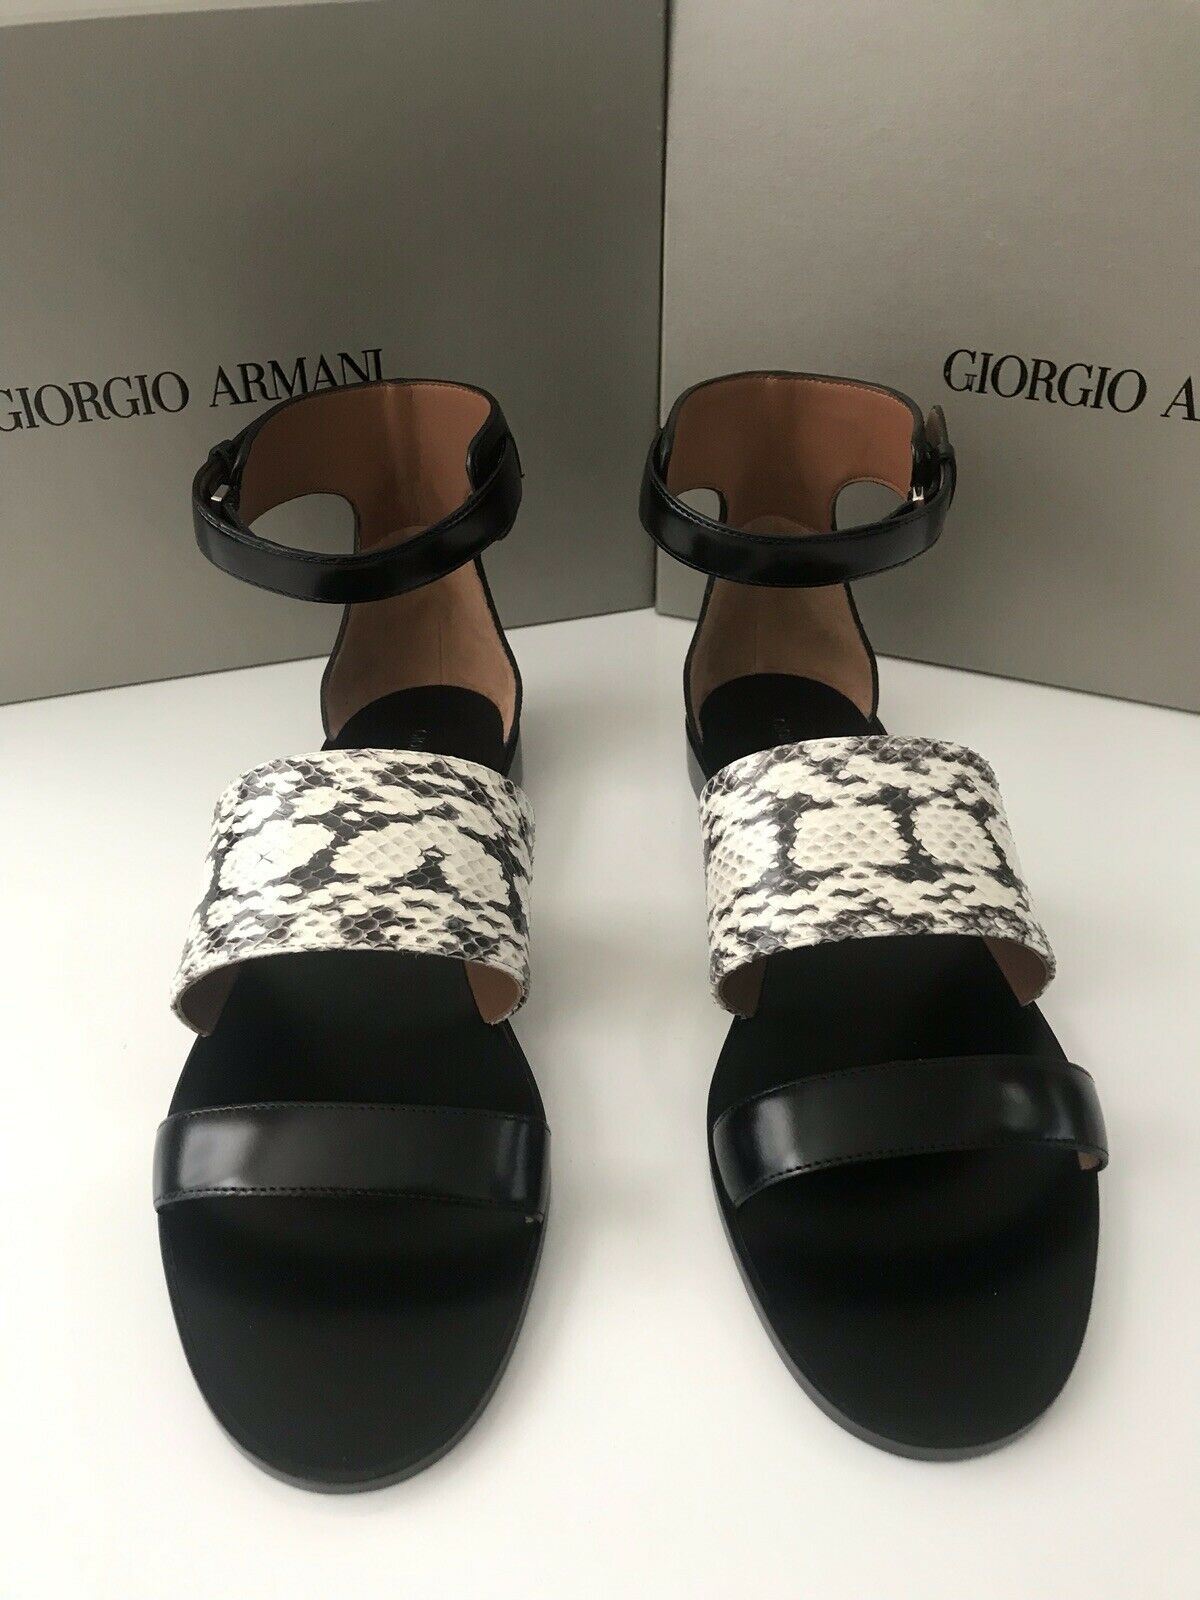 NIB $995 Giorgio Armani Women's Snake Leather Black Sandals Shoes 37.5 EU Italy